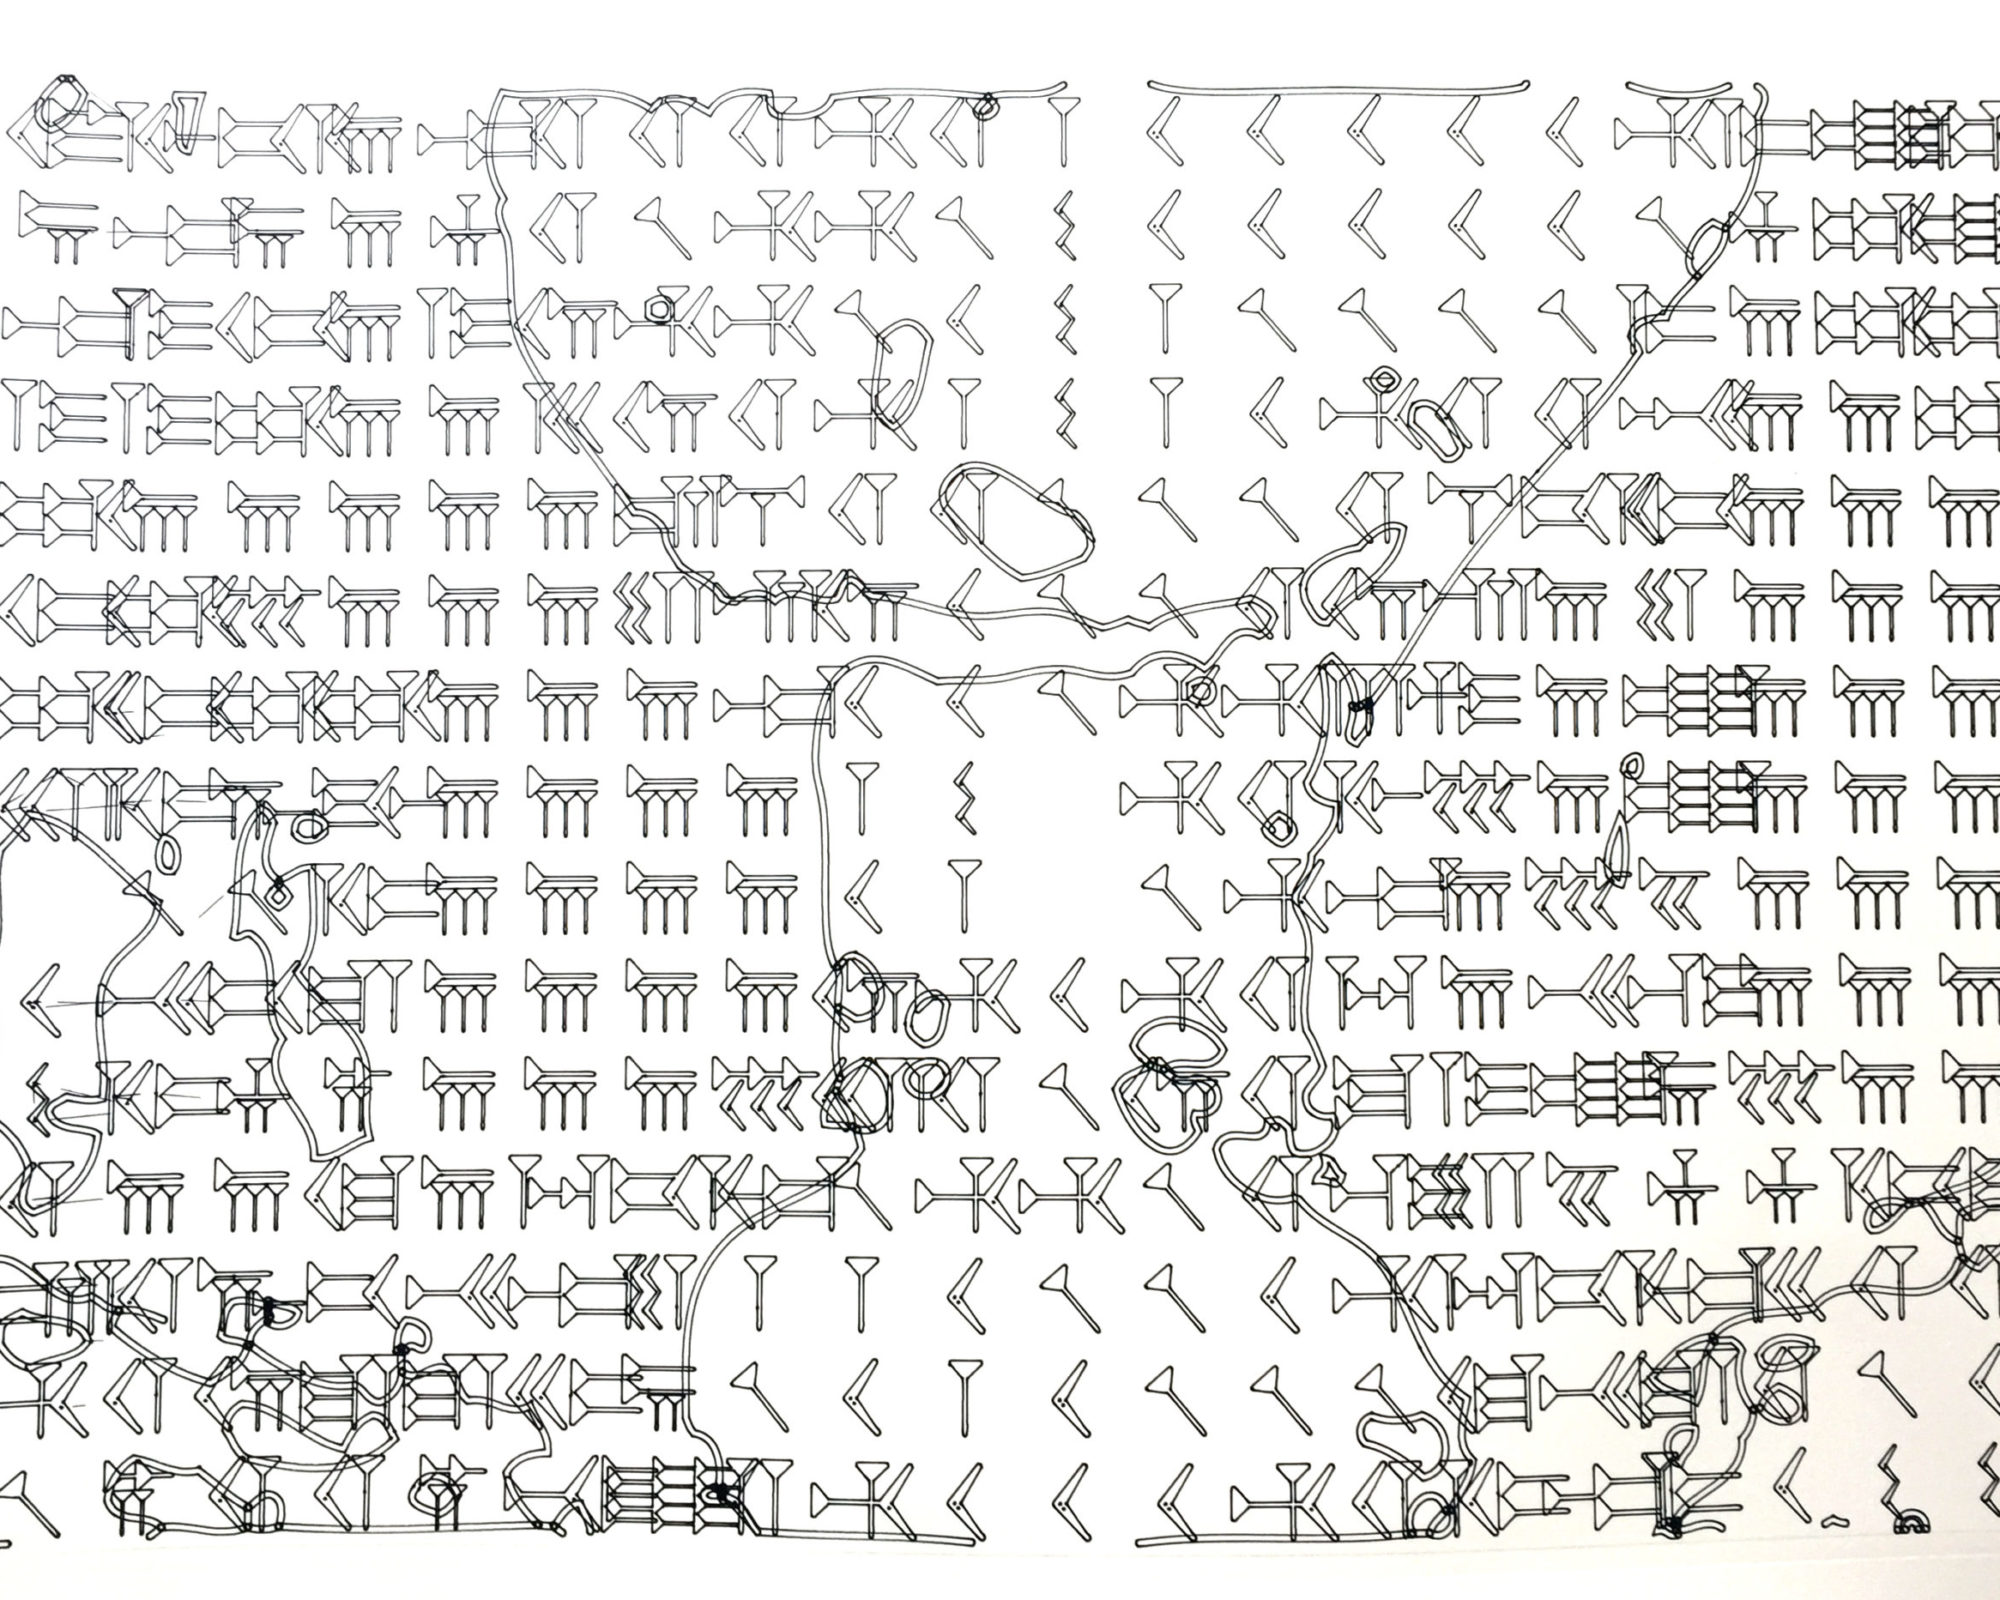 Vuk Cosic, Very Deep ASCII, plotter drawing, ink on paper, 42 x 60 cm, 2015